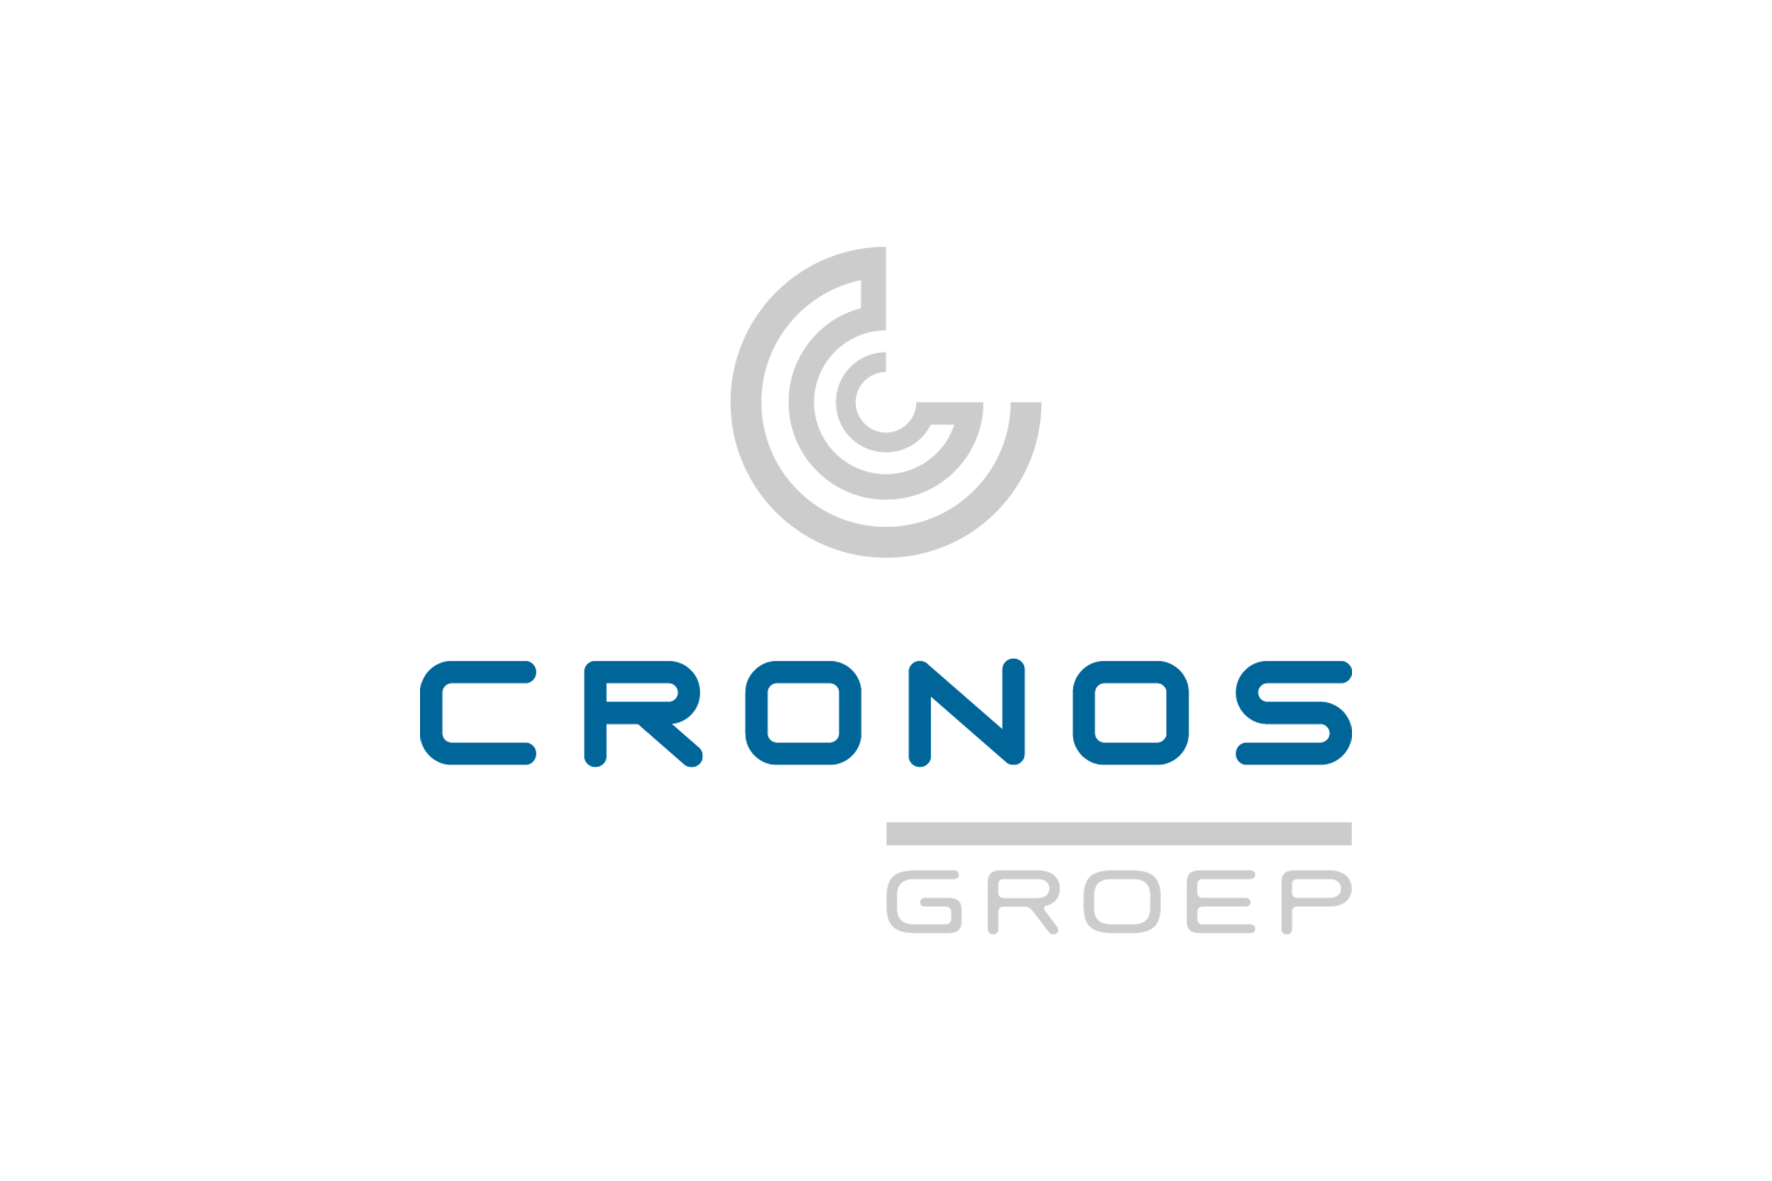 Copy of Cronos Groep